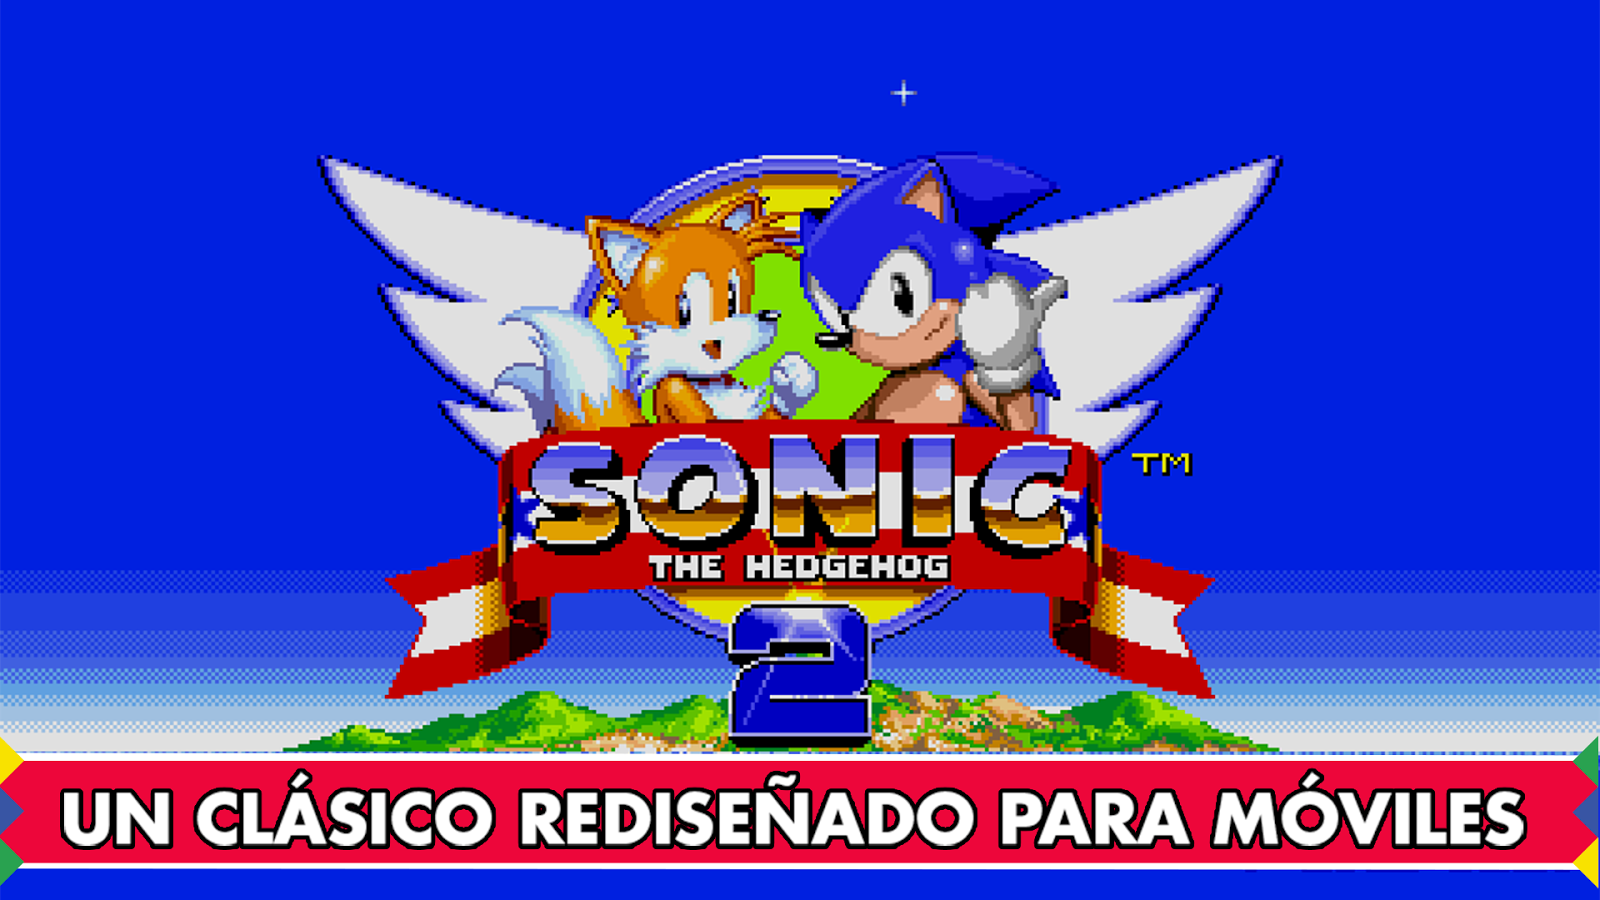 Sonic The Hedgehog 2 V3.0.2 Apk Full [Zippyshare] QM1qQACO6zGUoNrLJRDFbSvQKBDrAKYW39hnueWMG2xSbEvoxGqZ8XqDP1khJ8kKlVs=h900-rw